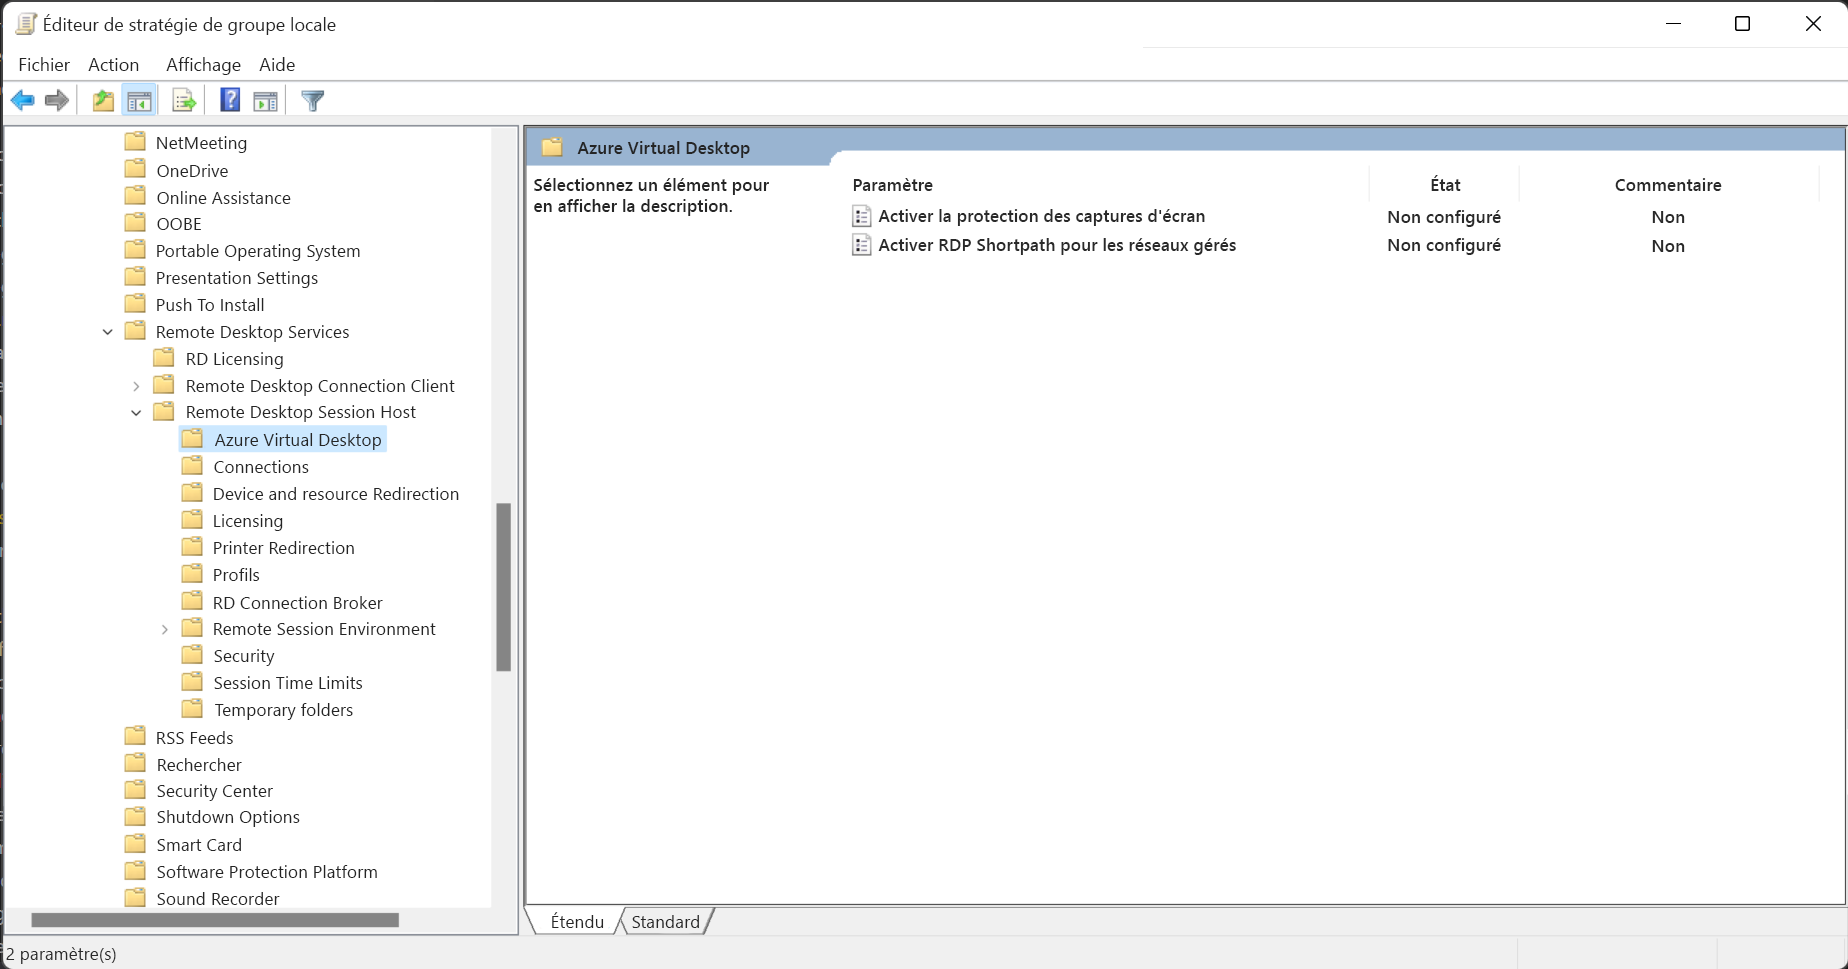 Screenshot showing Azure Desktop policies.